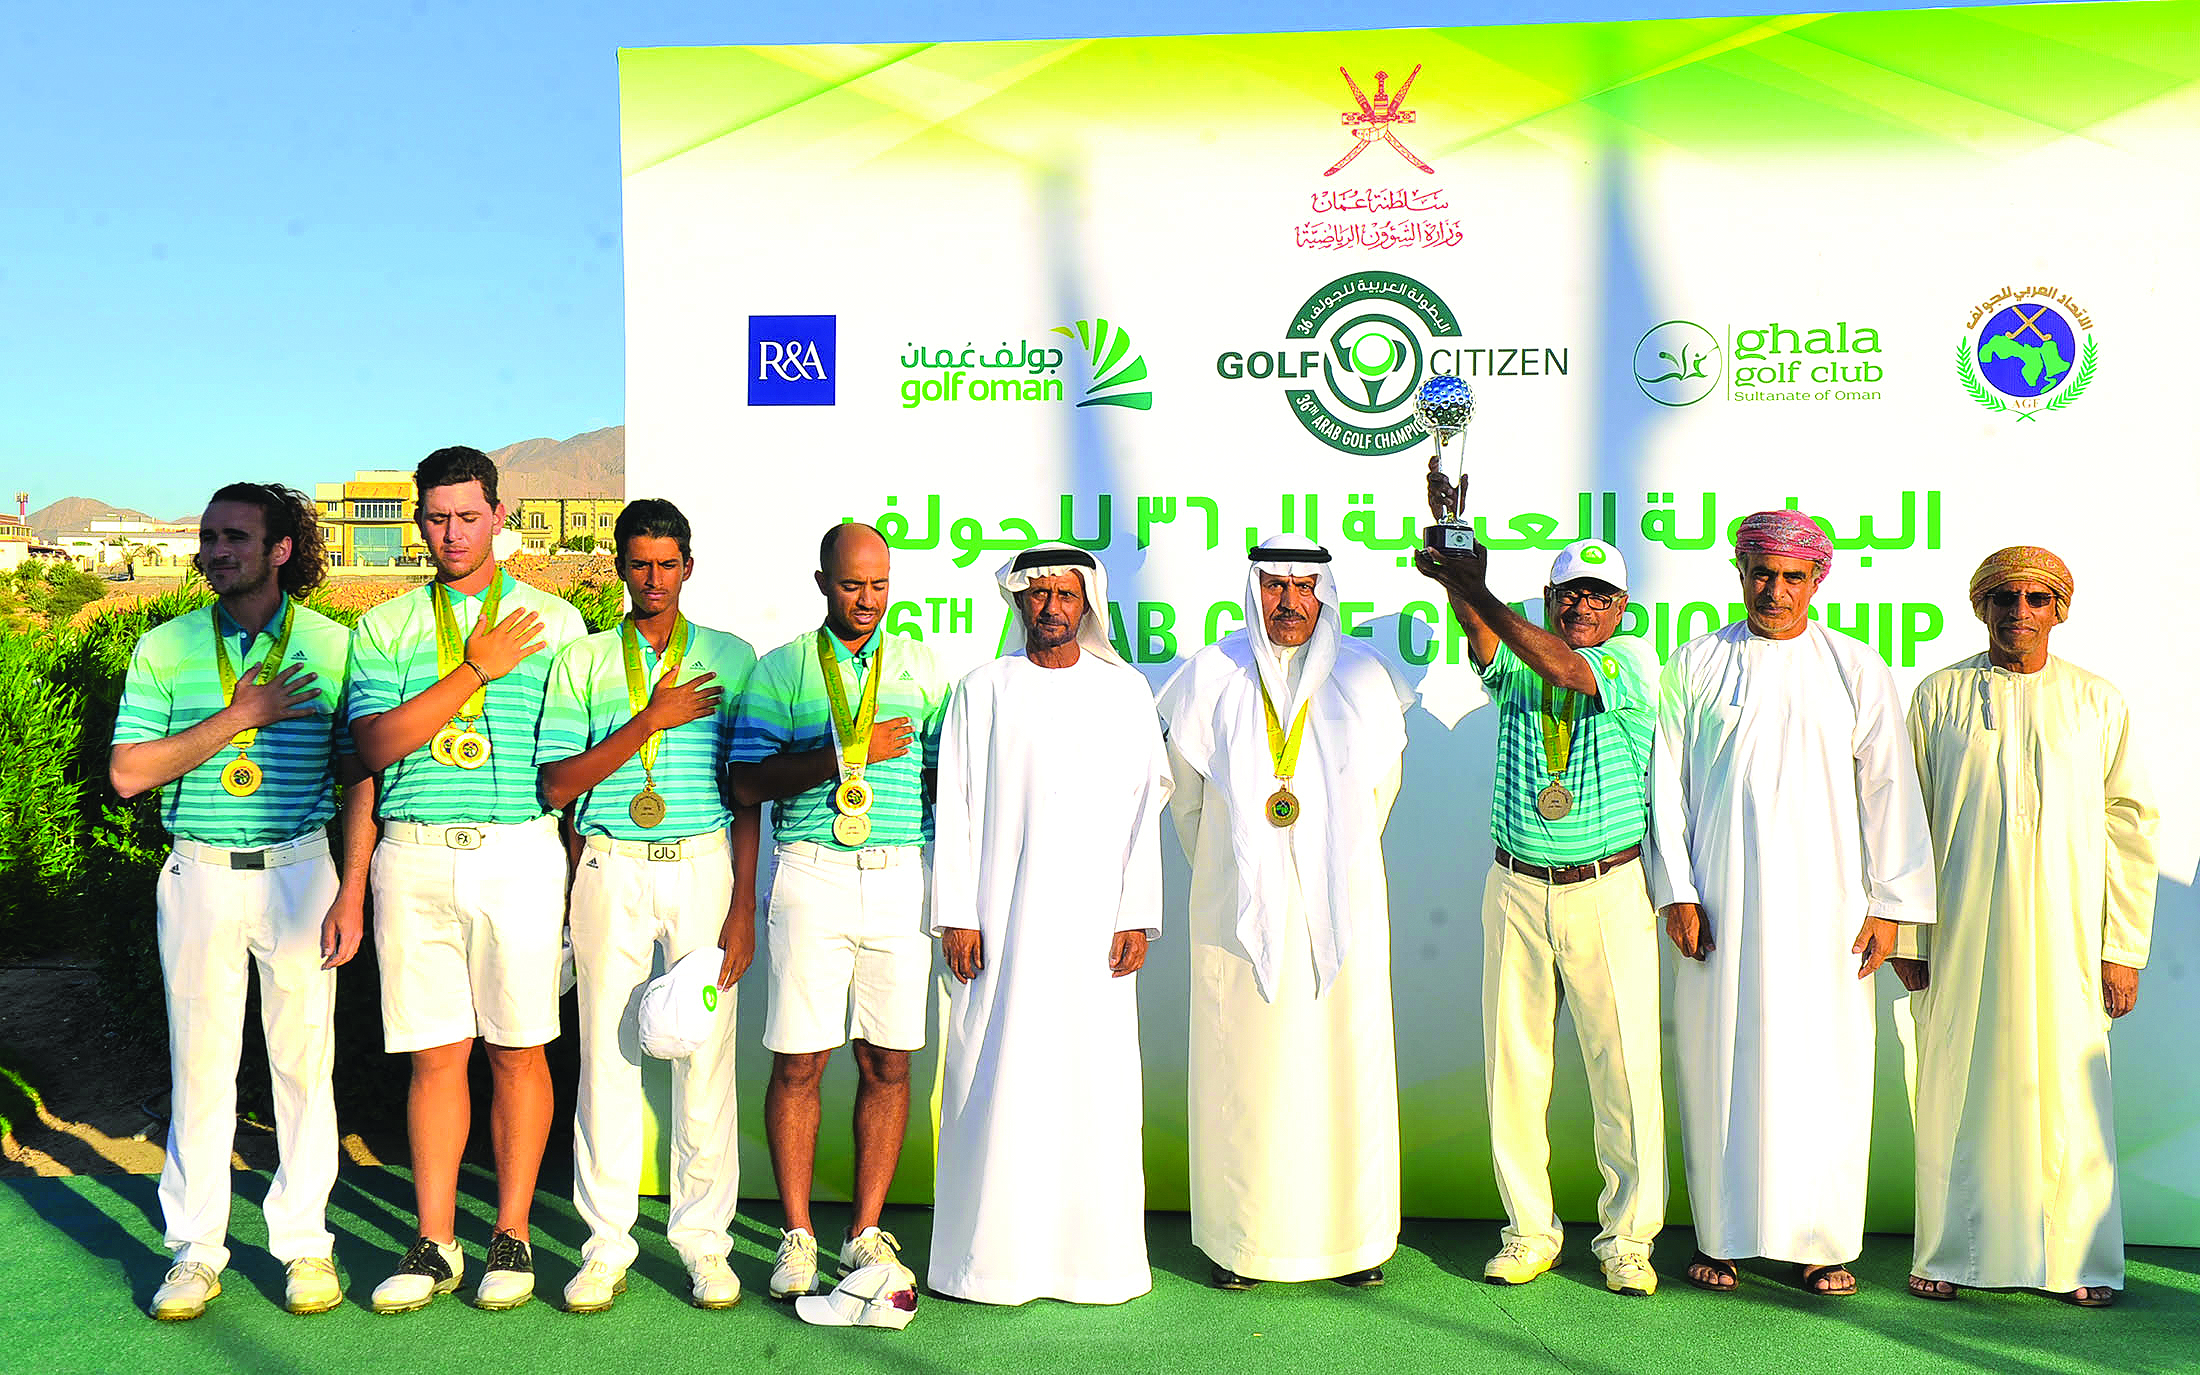 Oman Golf: Saudi Arabia emerge overall winners at Arab Golf Championship